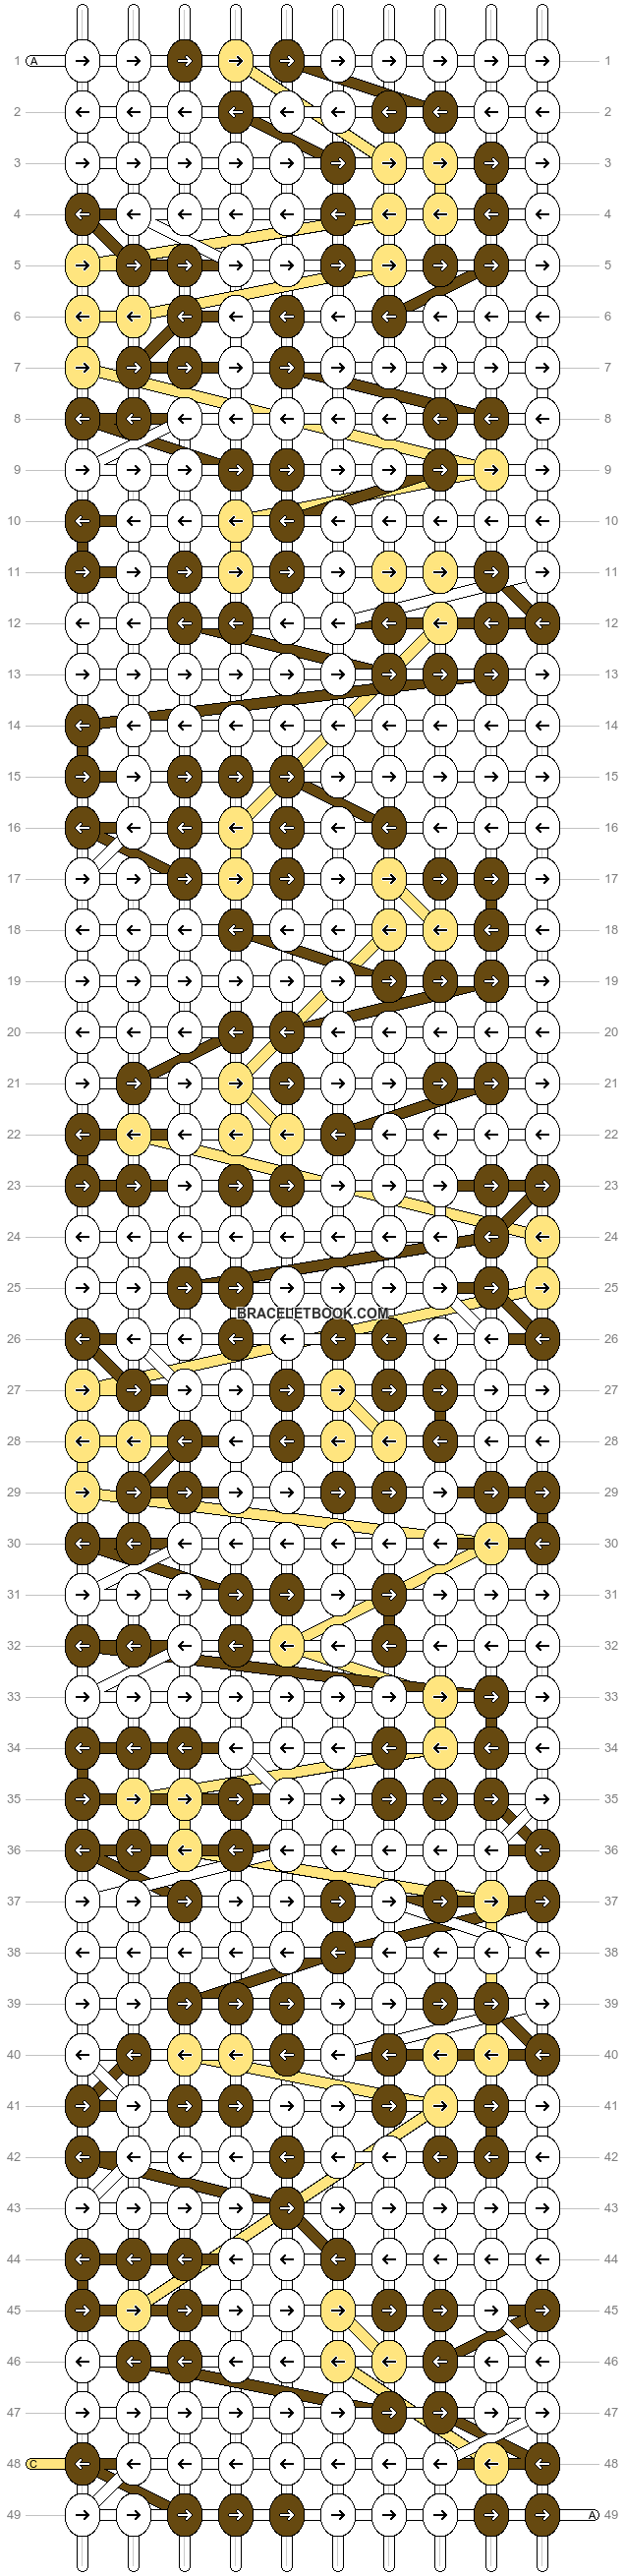 Alpha pattern #45272 variation #120263 pattern